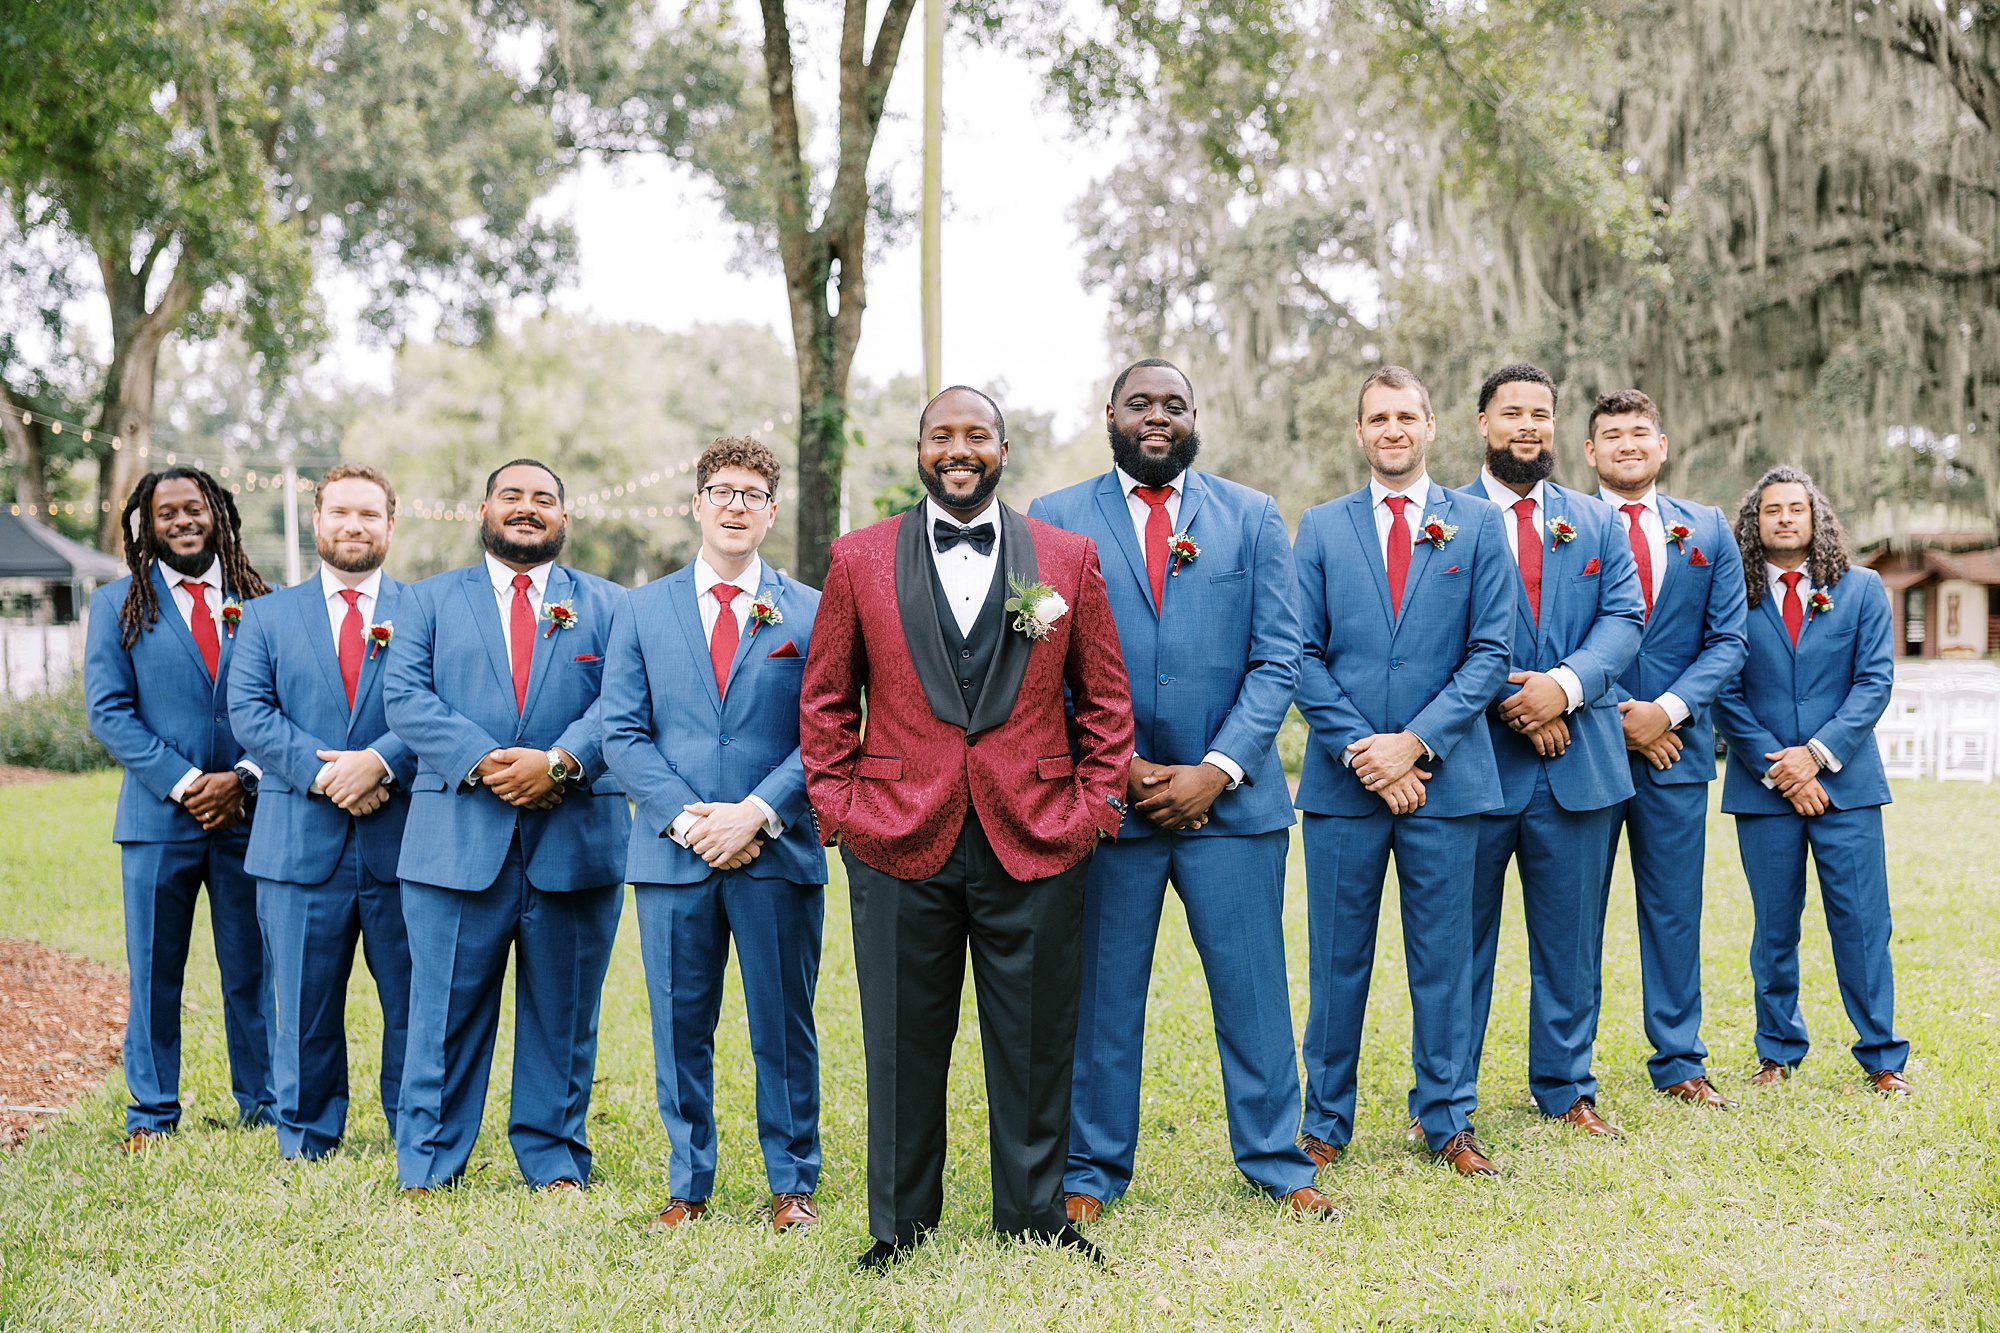 groom in red suit jacket poses with groomsmen in navy suits